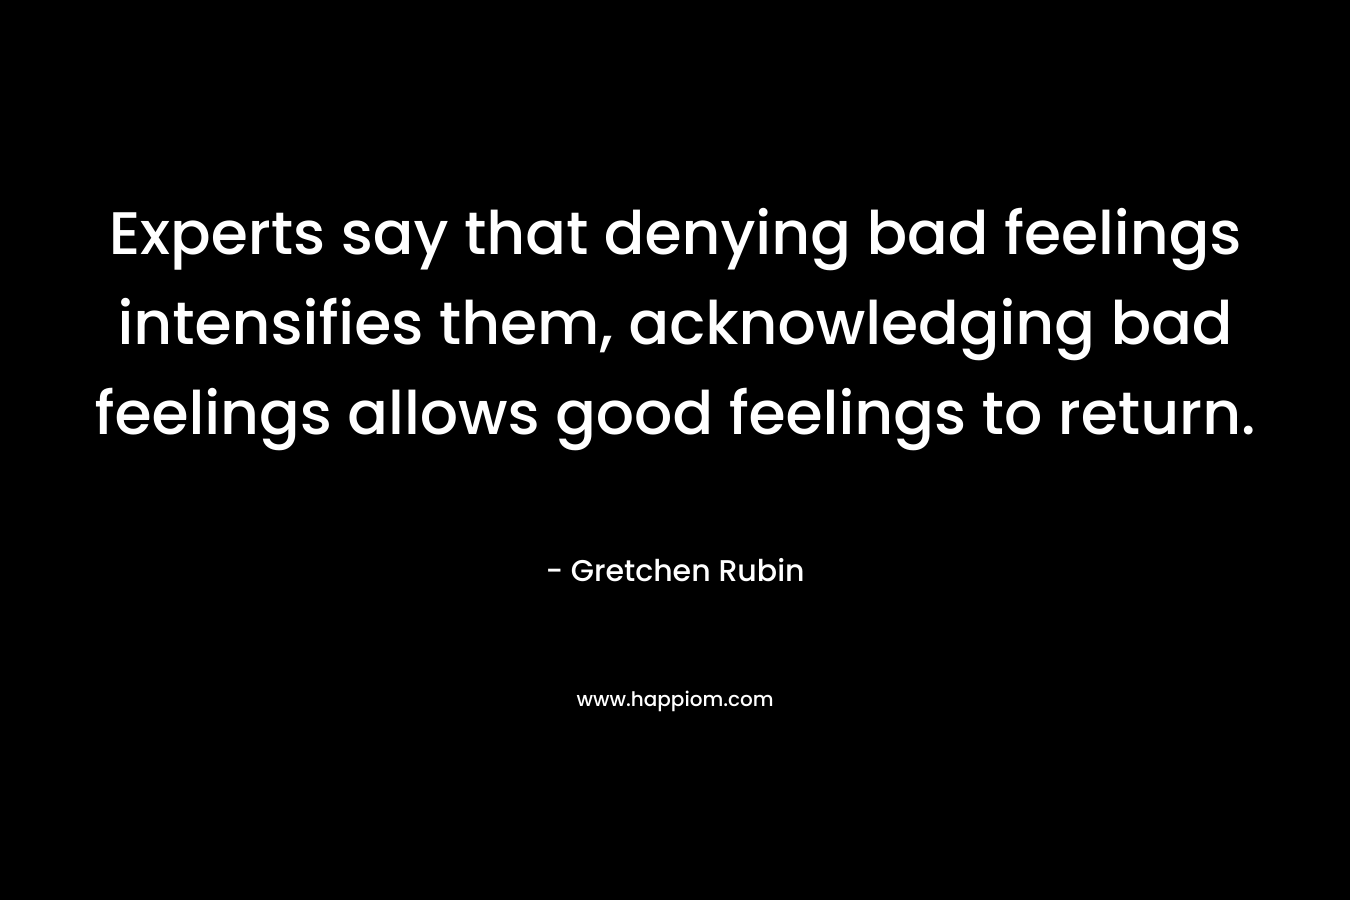 Experts say that denying bad feelings intensifies them, acknowledging bad feelings allows good feelings to return.